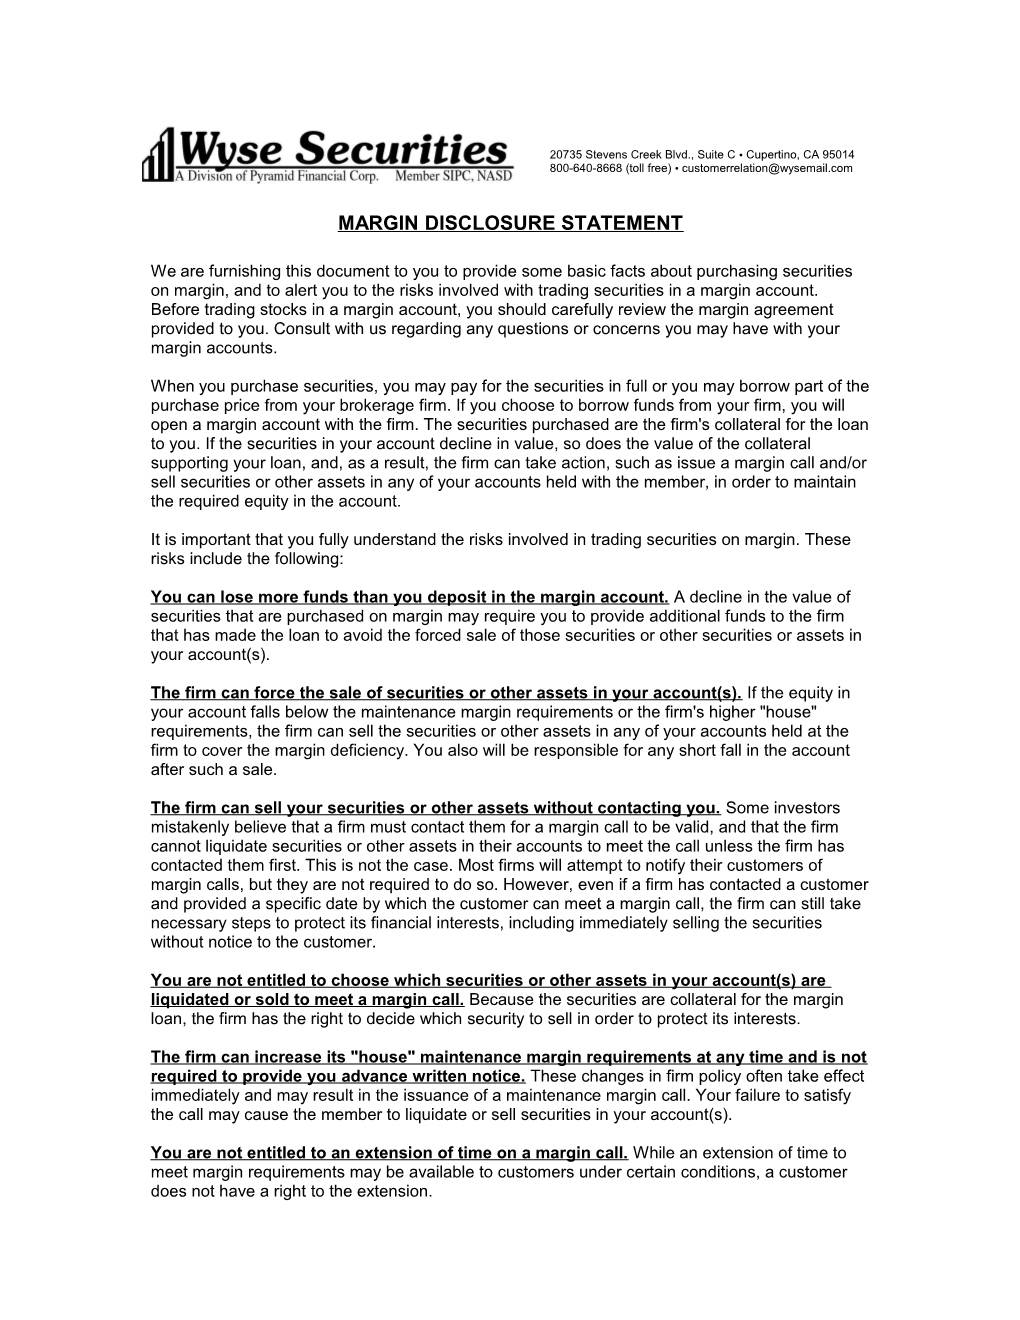 Wyse Securities Margin Disclosure Statement